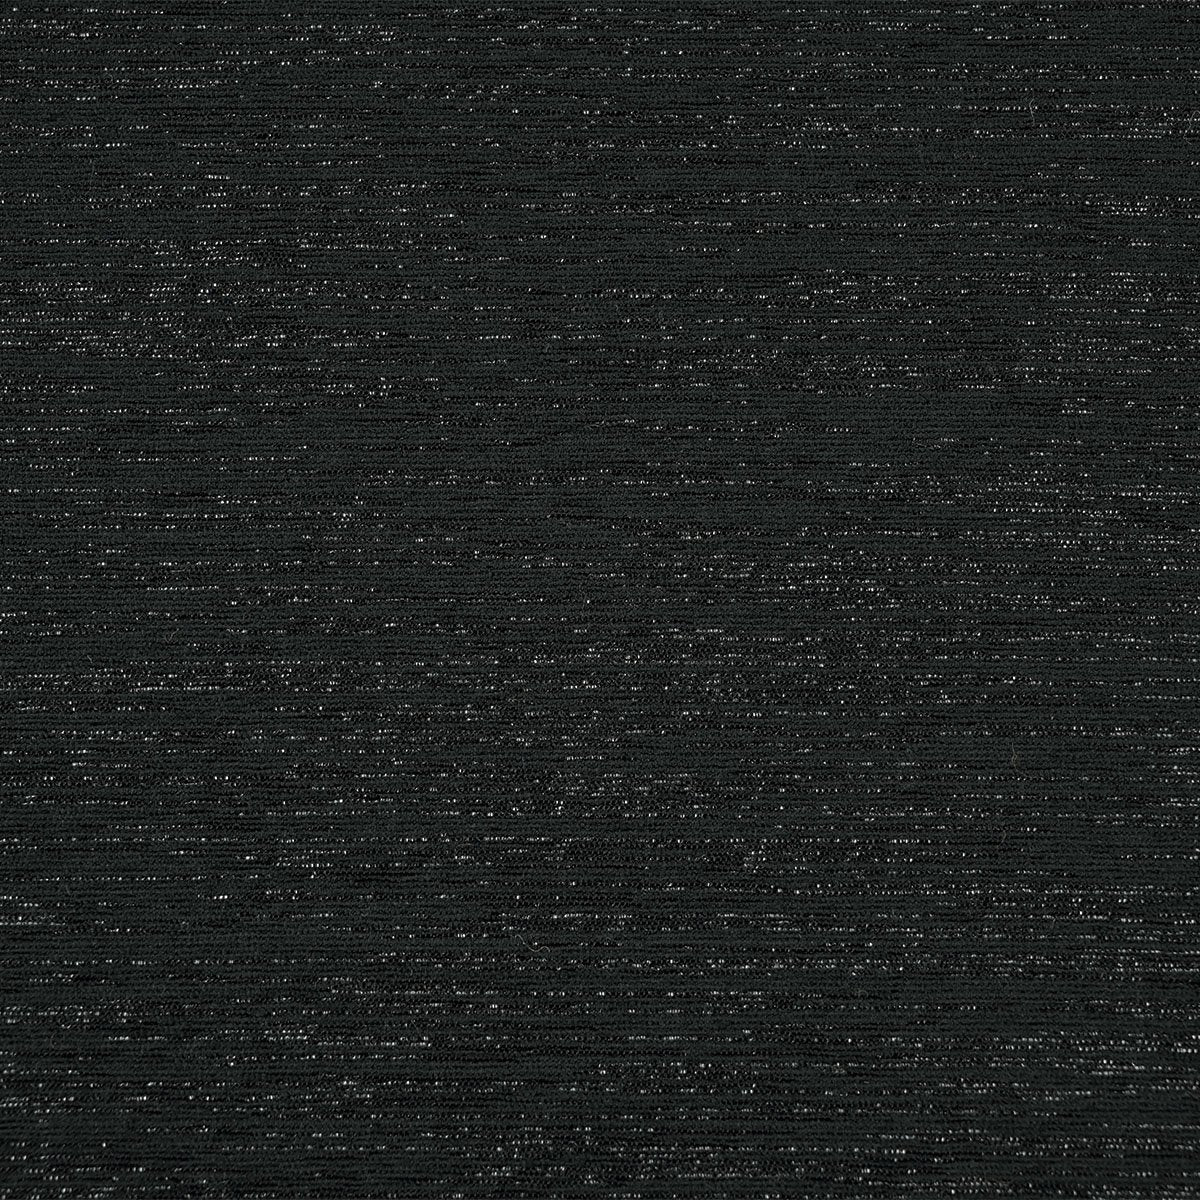 Black Grosgrain Fabric 99768